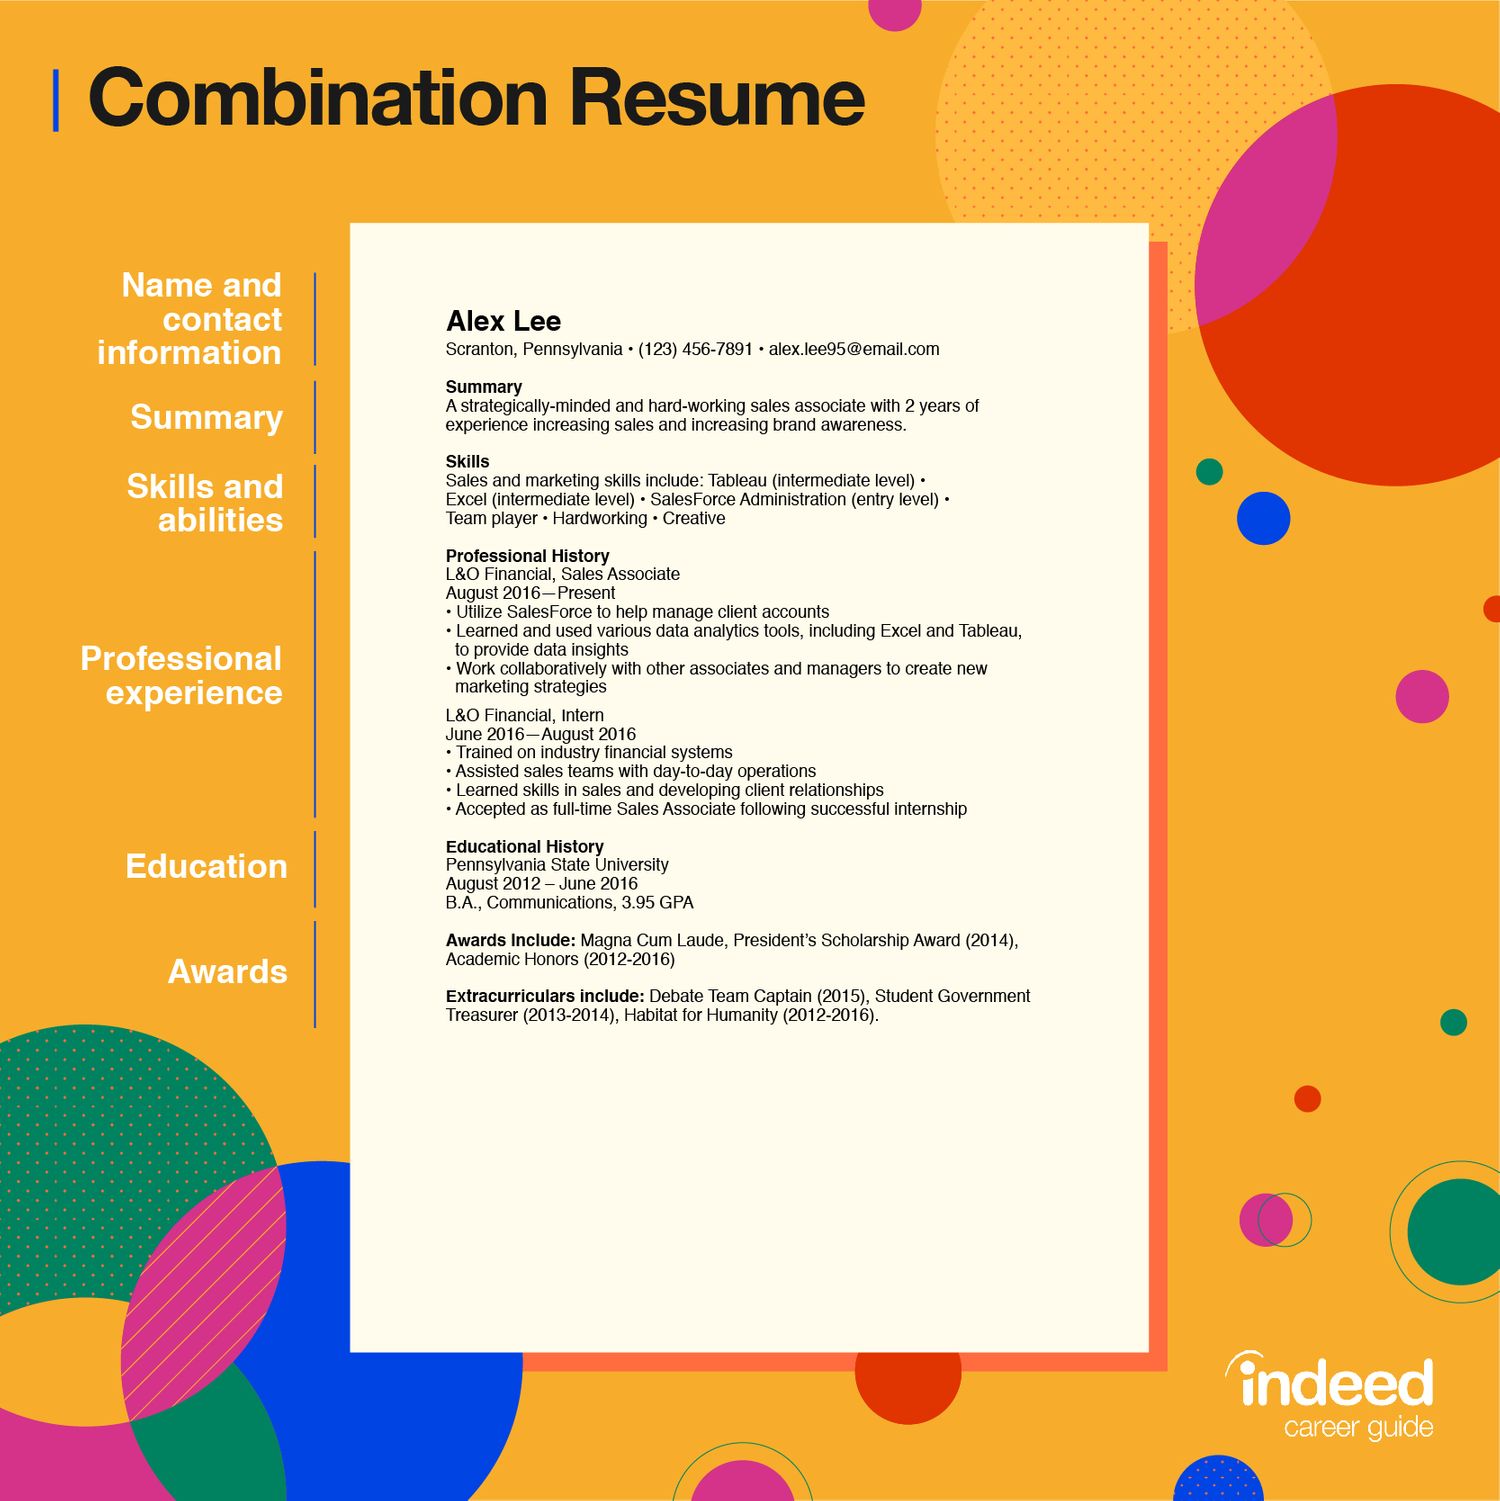 Combination Resume Format